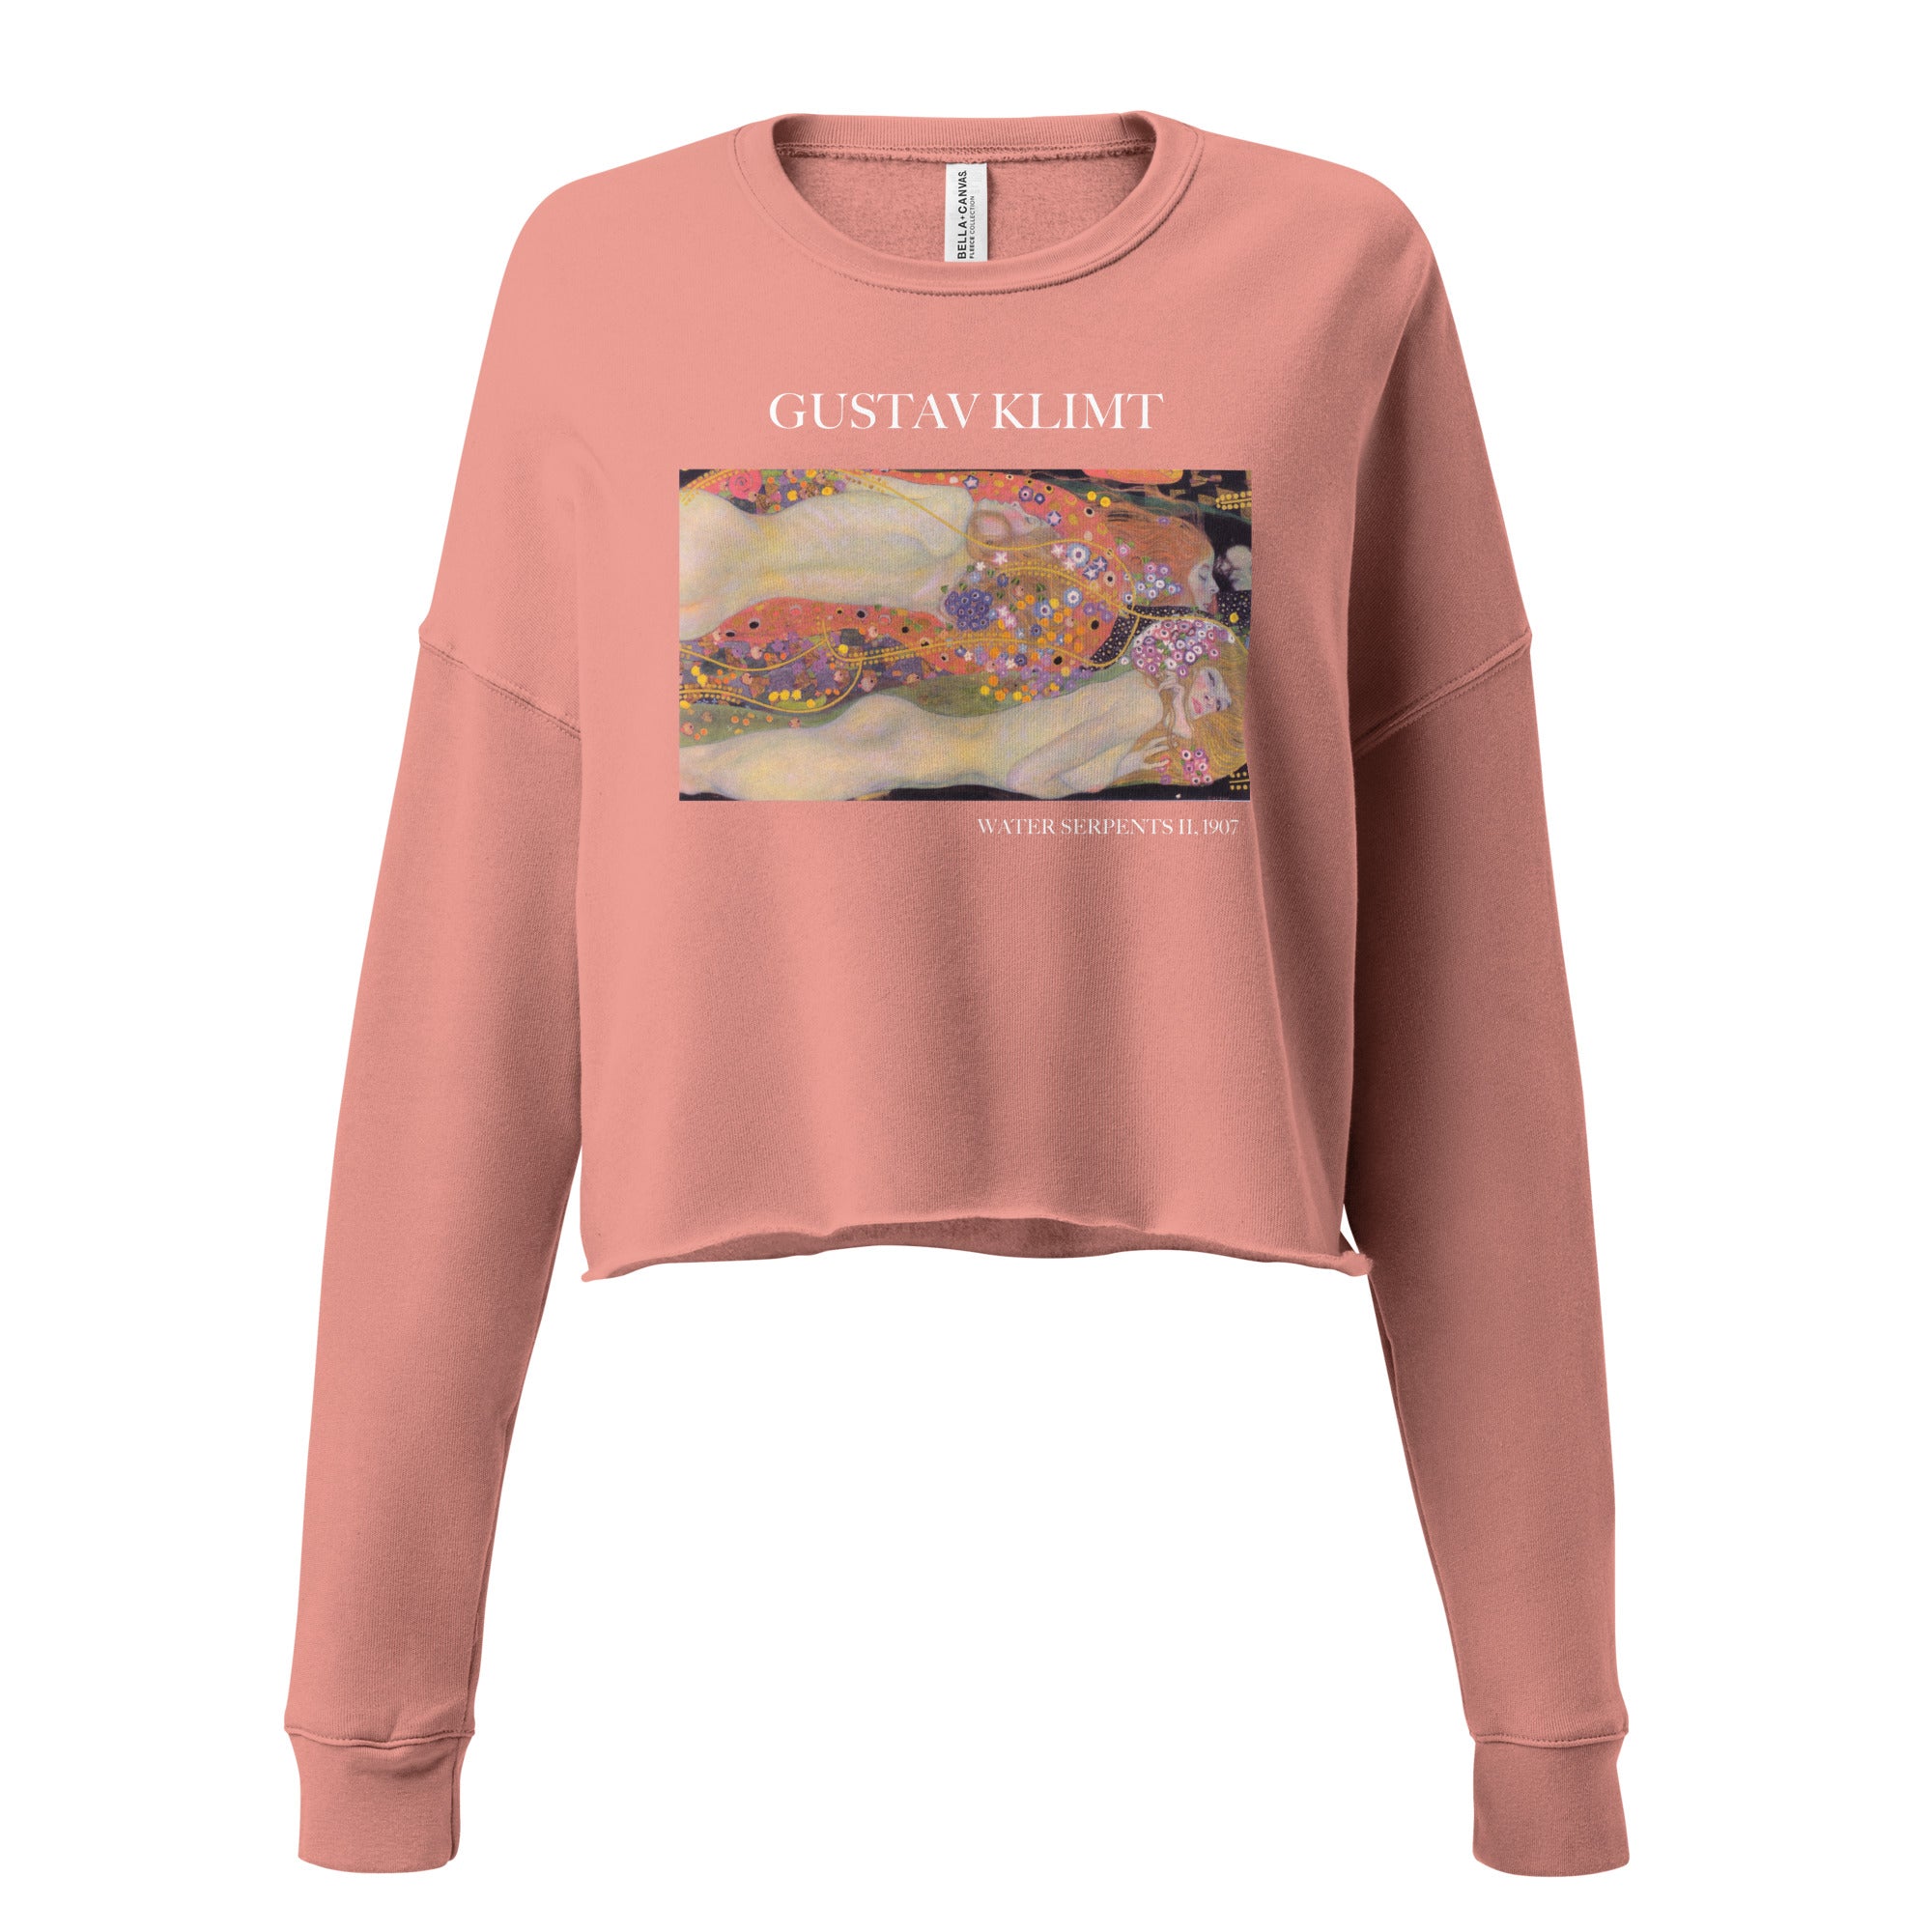 Gustav Klimt 'Water Serpents II' Famous Painting Cropped Sweatshirt | Premium Art Cropped Sweatshirt